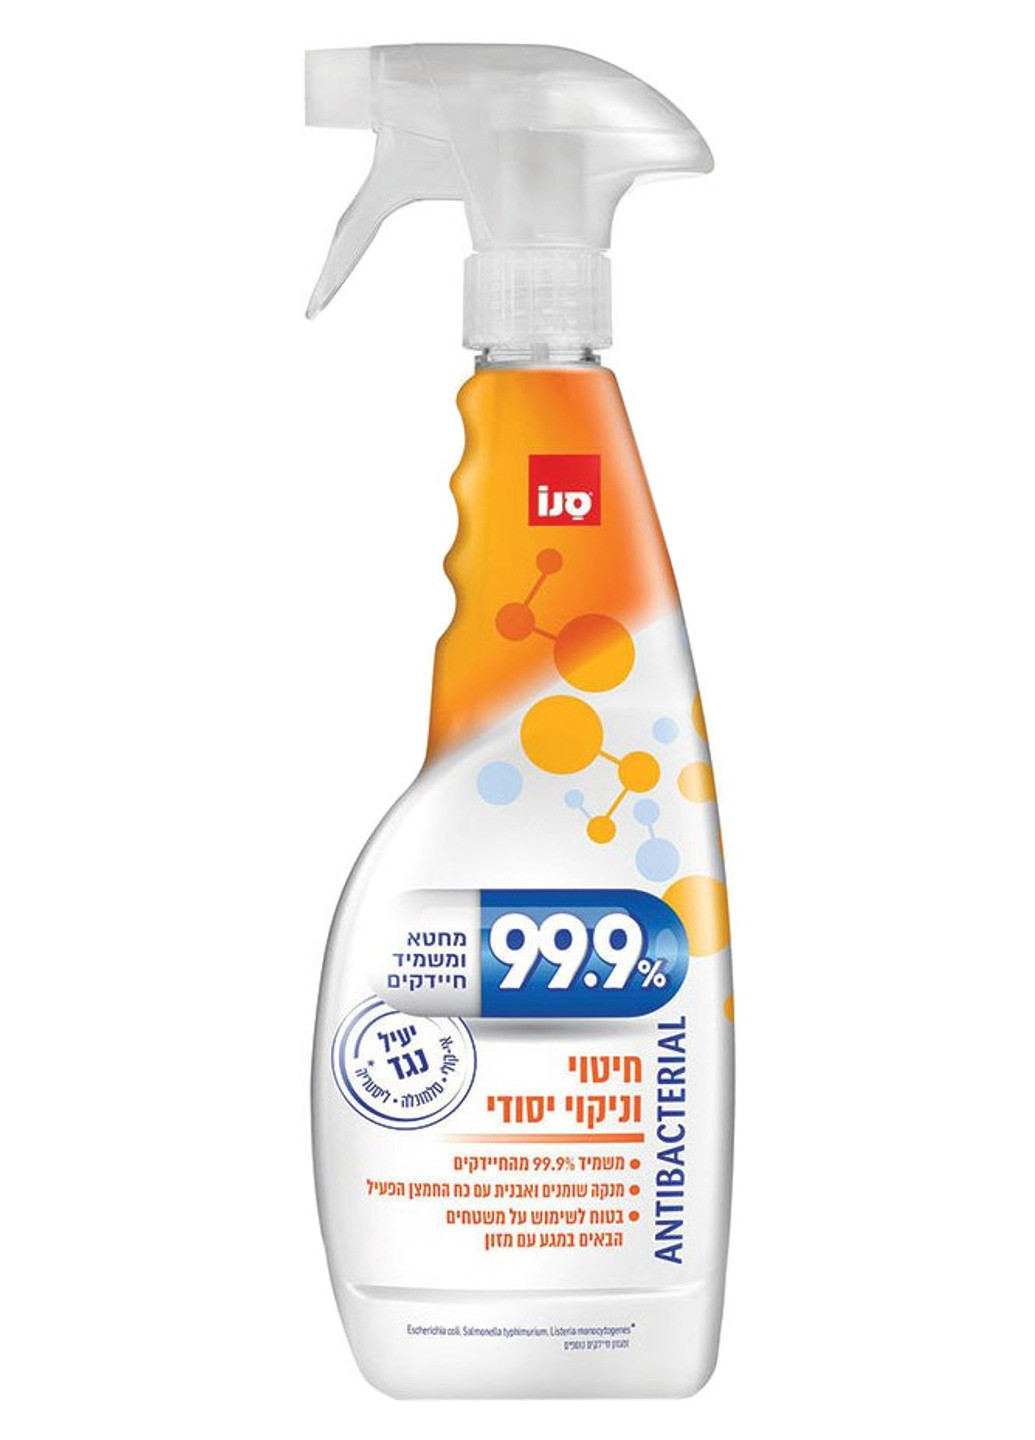 Антибактериальное средство для очистки жира и грязи 99.9% Antibacterial Spray 750 мл Sano (199671361)